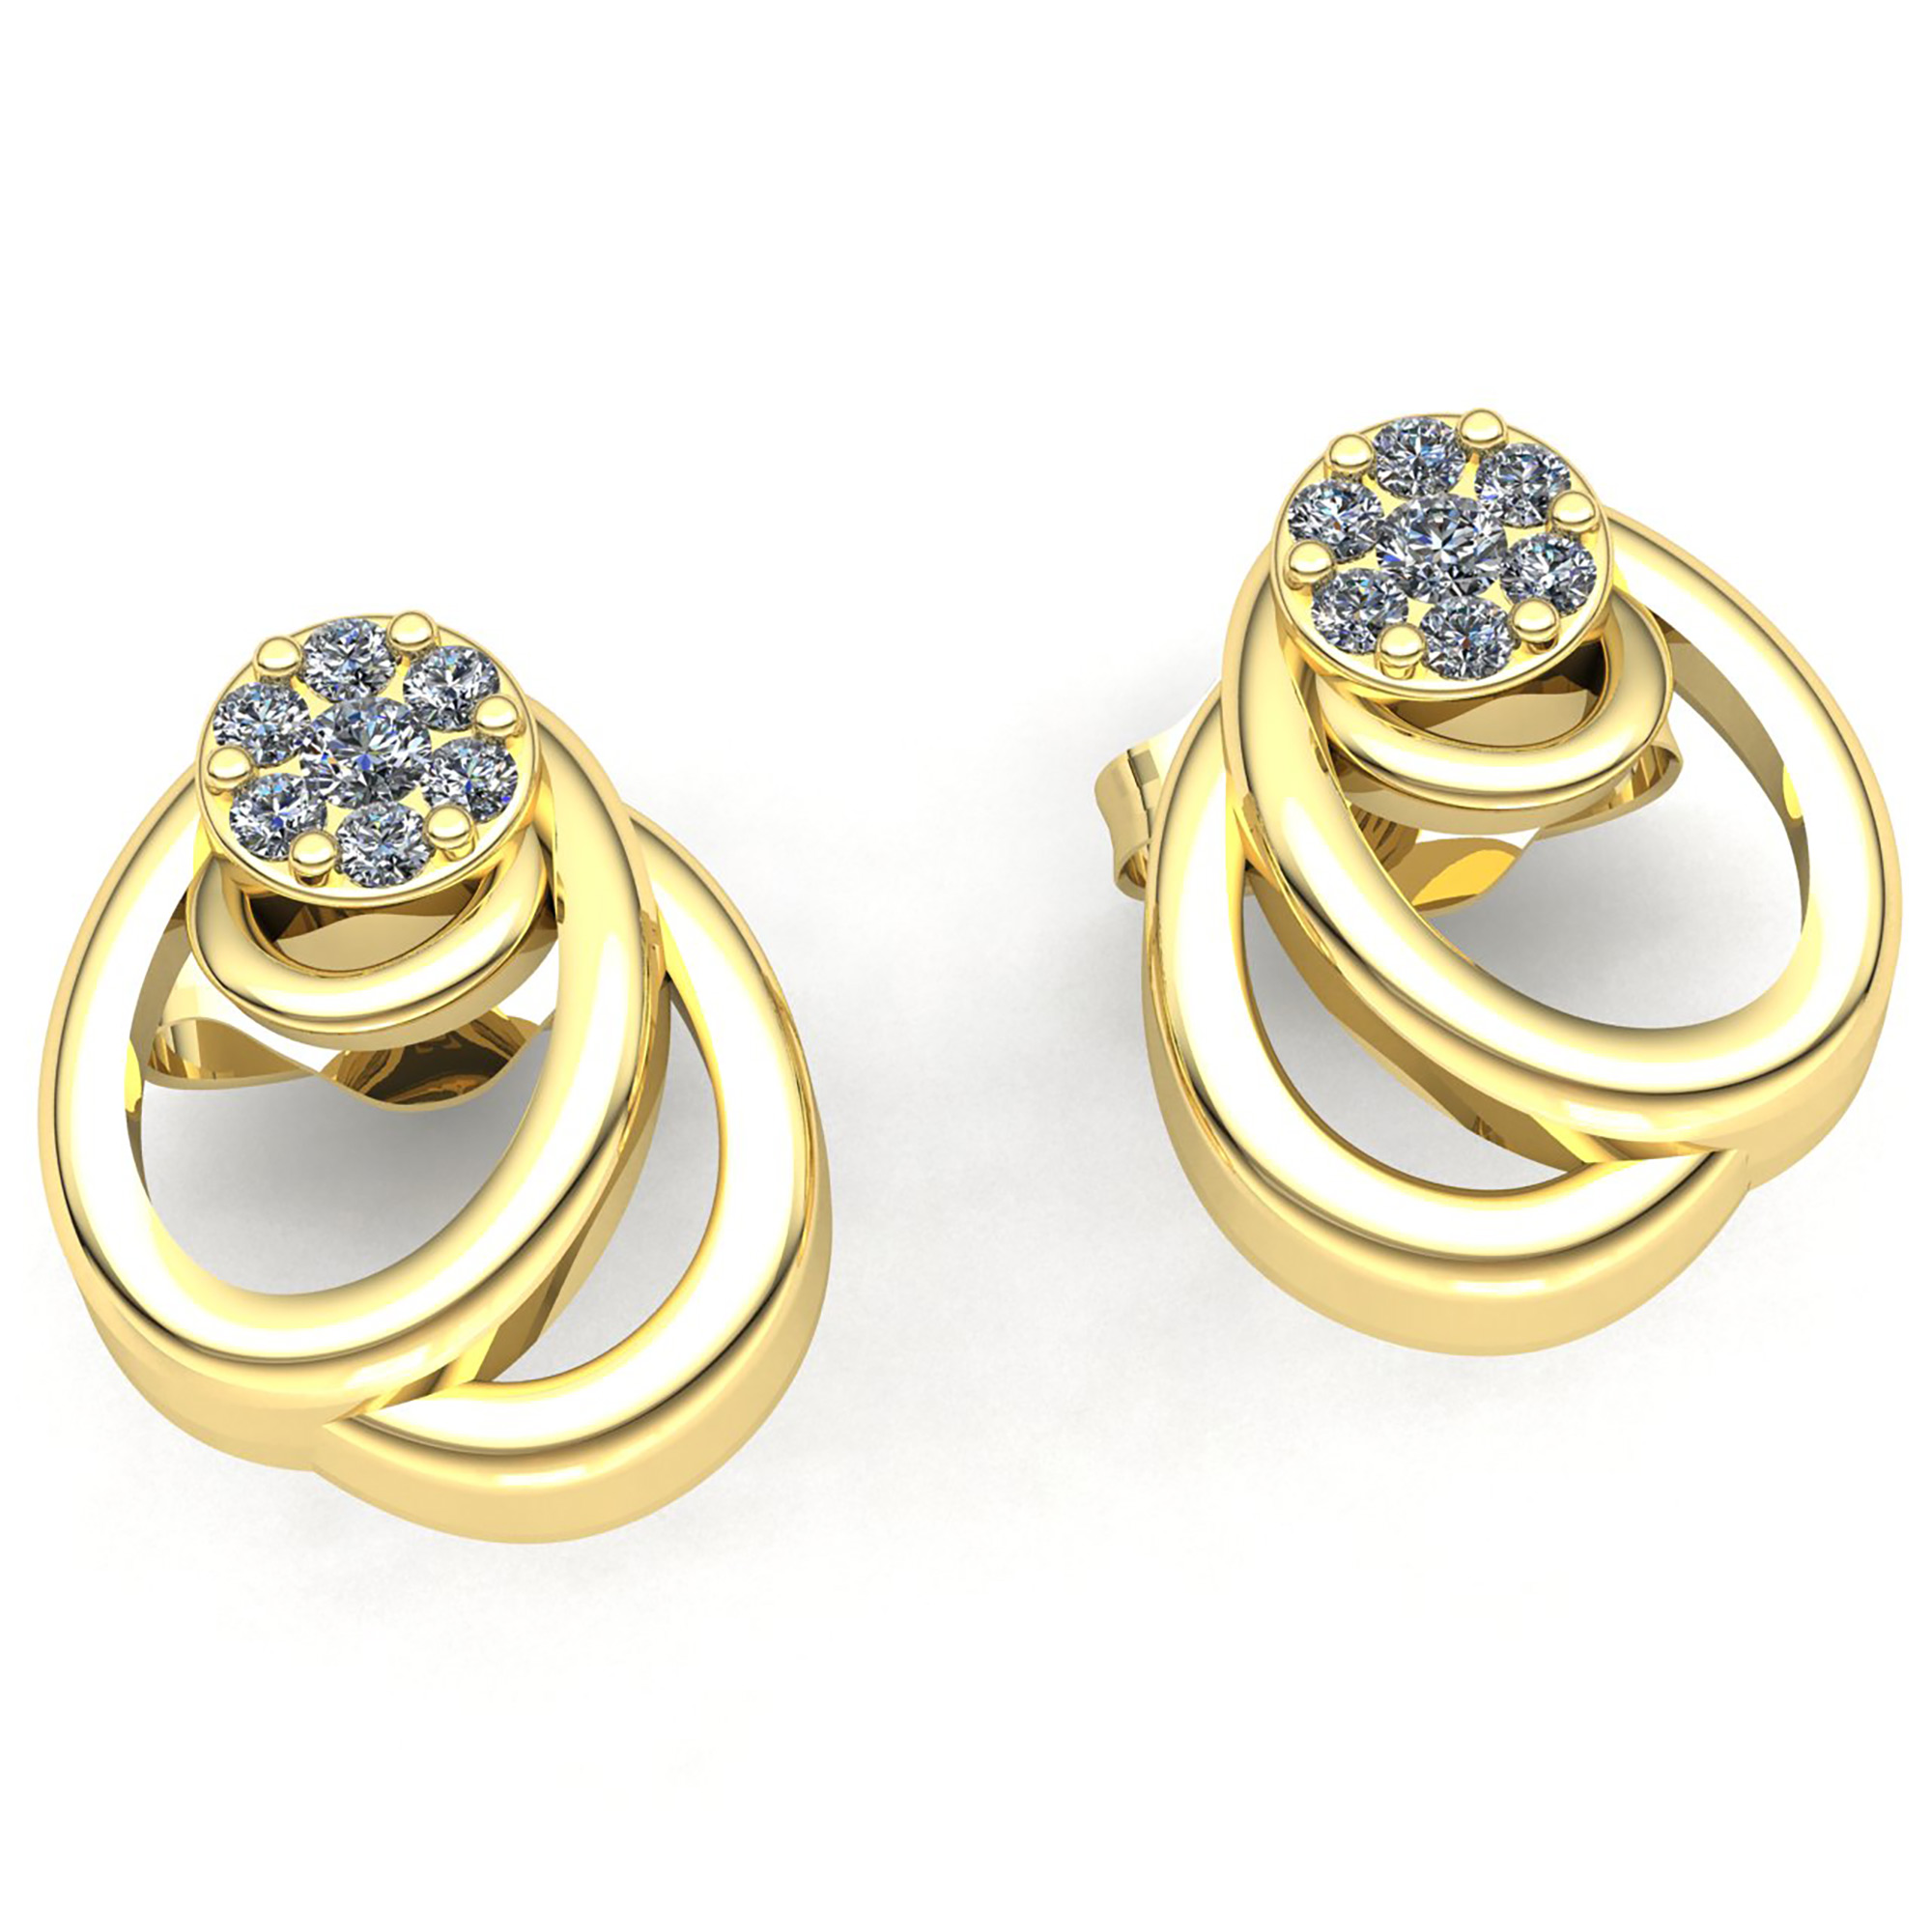 Jewel We Sell Genuine 1.0ct Round Cut Diamond Ladies Cluster Fancy Earrings 14K White, Yellow or Rose Gold IJ SI2